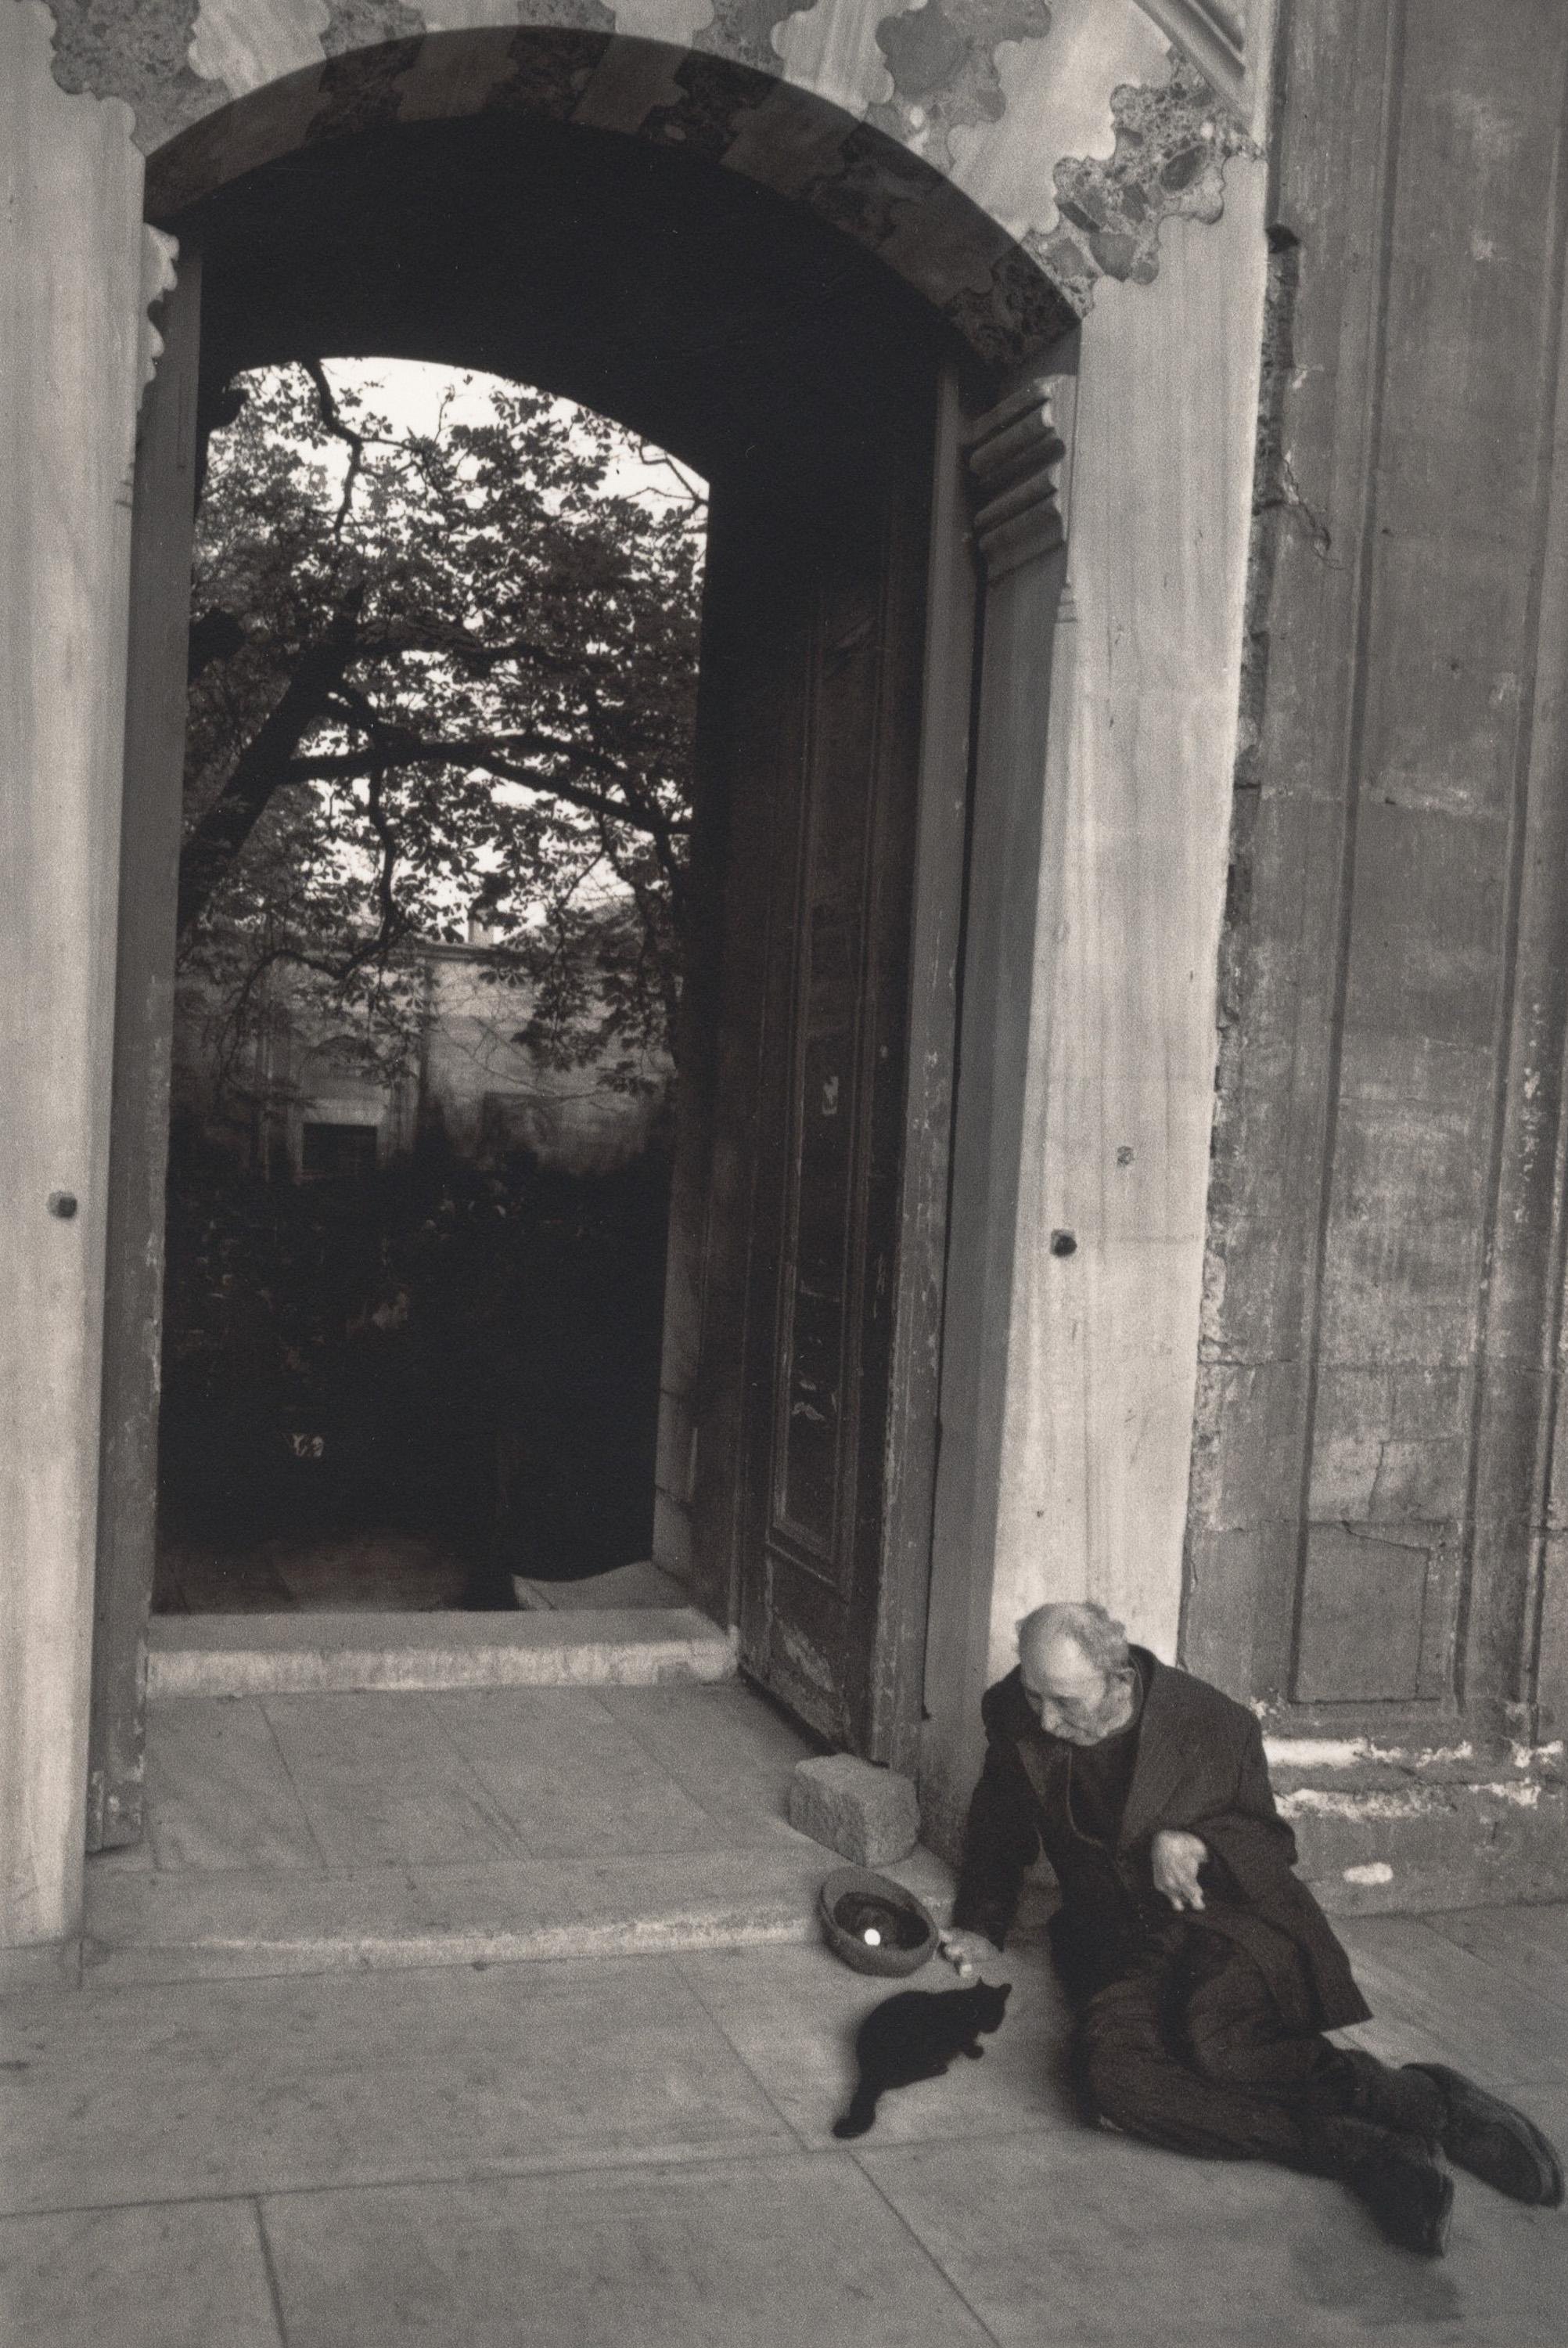 Pentti Sammallahti Landscape Photograph - Istanbul, Turkey (Man leaning near doorway, feeding a cat)